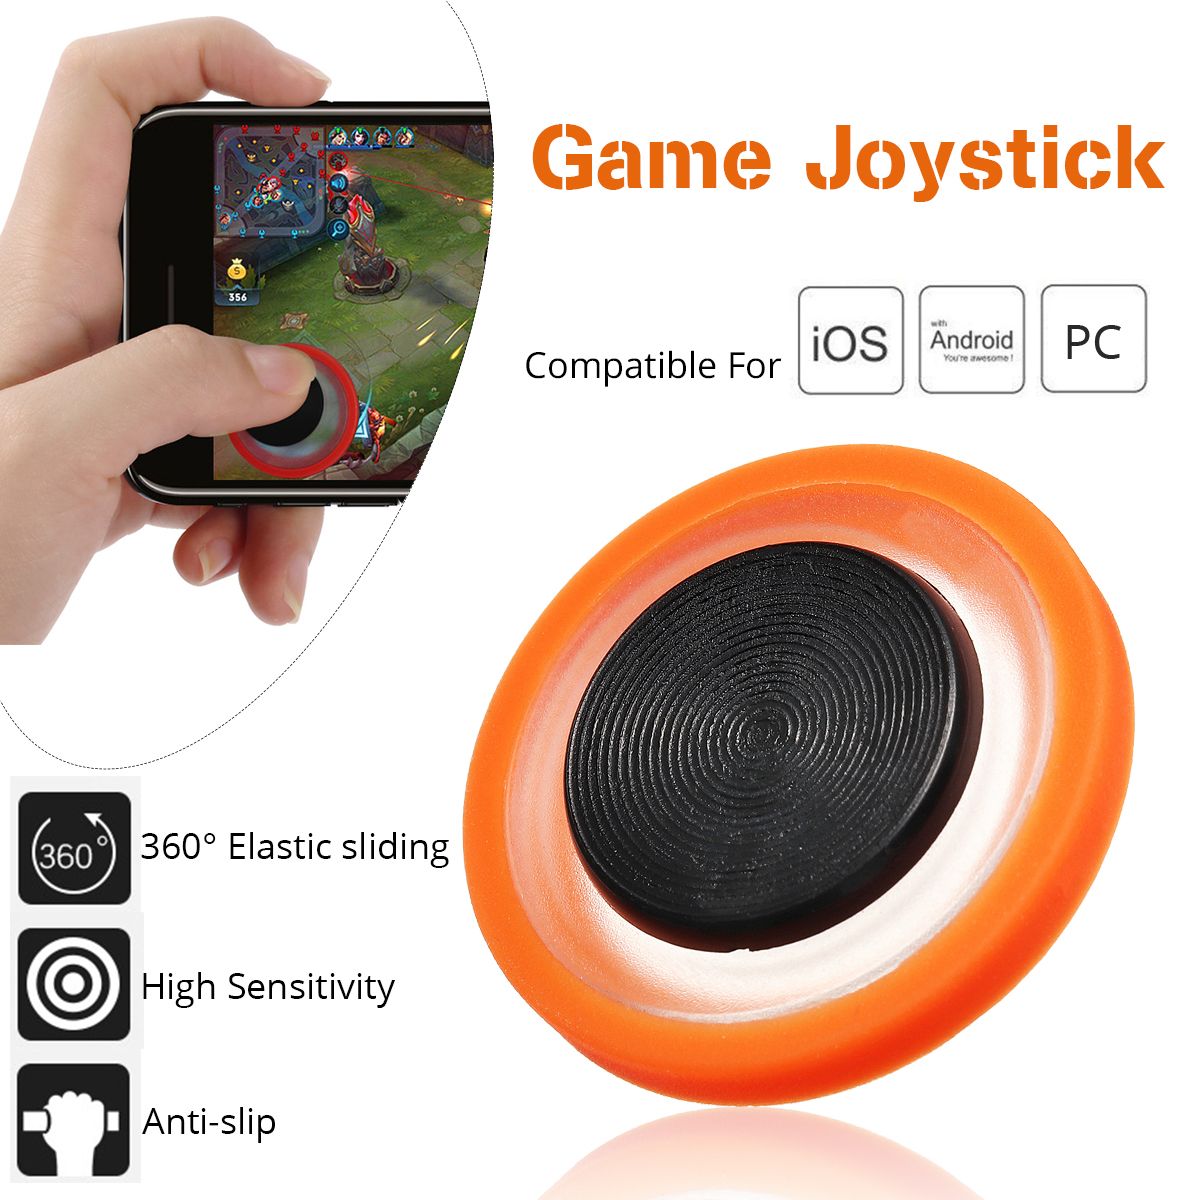 Mobile-Phone-Joystick-Game-Controller-Tool-For-PUBG-FORNITE-FIFA2018-Random-Color-1335376